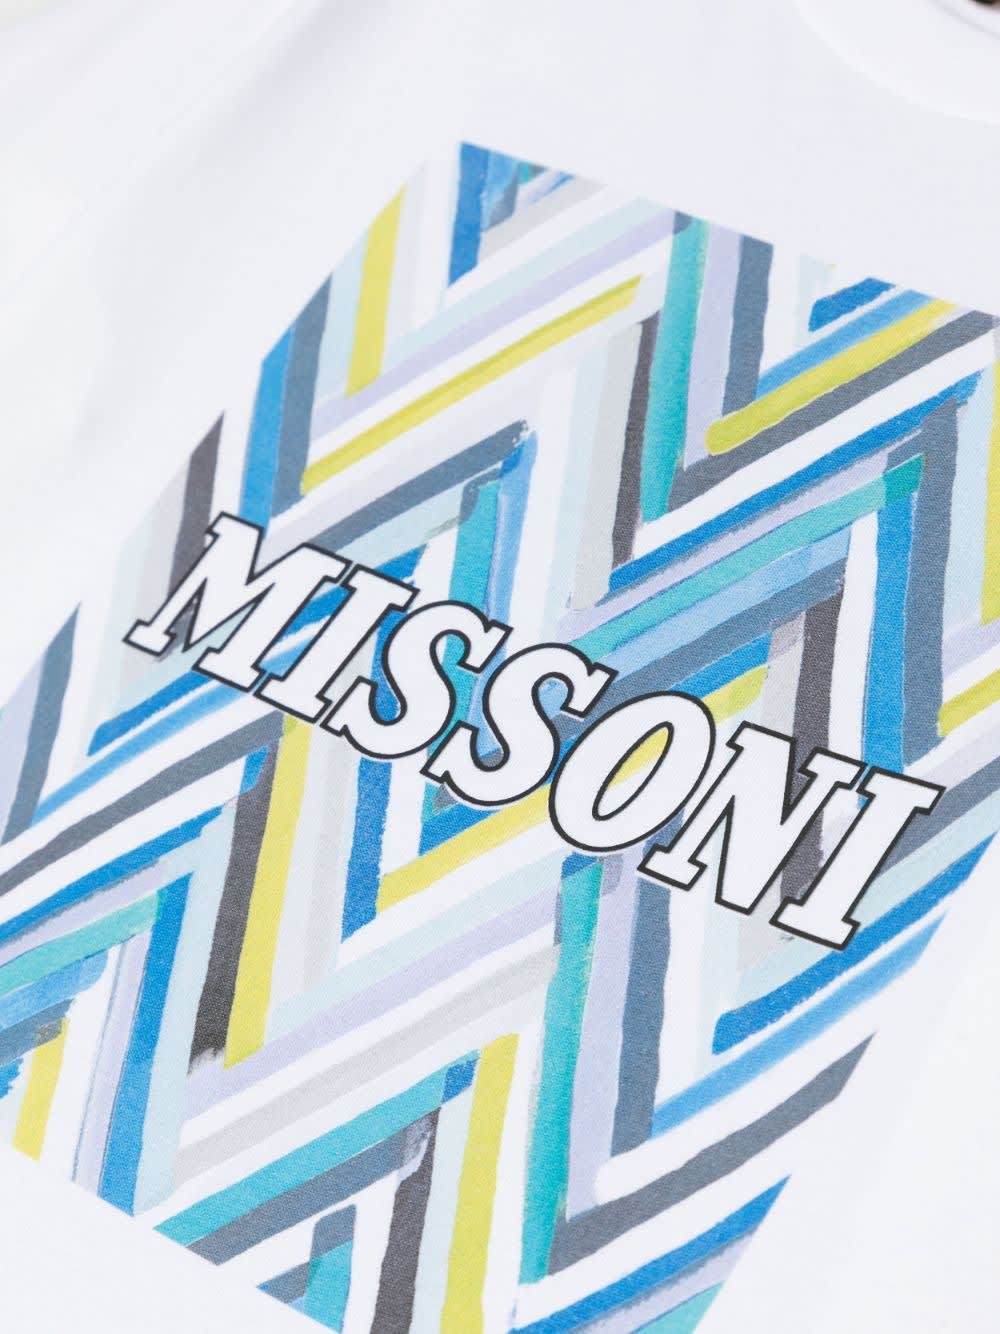 Shop Missoni White T-shirt With Blue Chevron Print